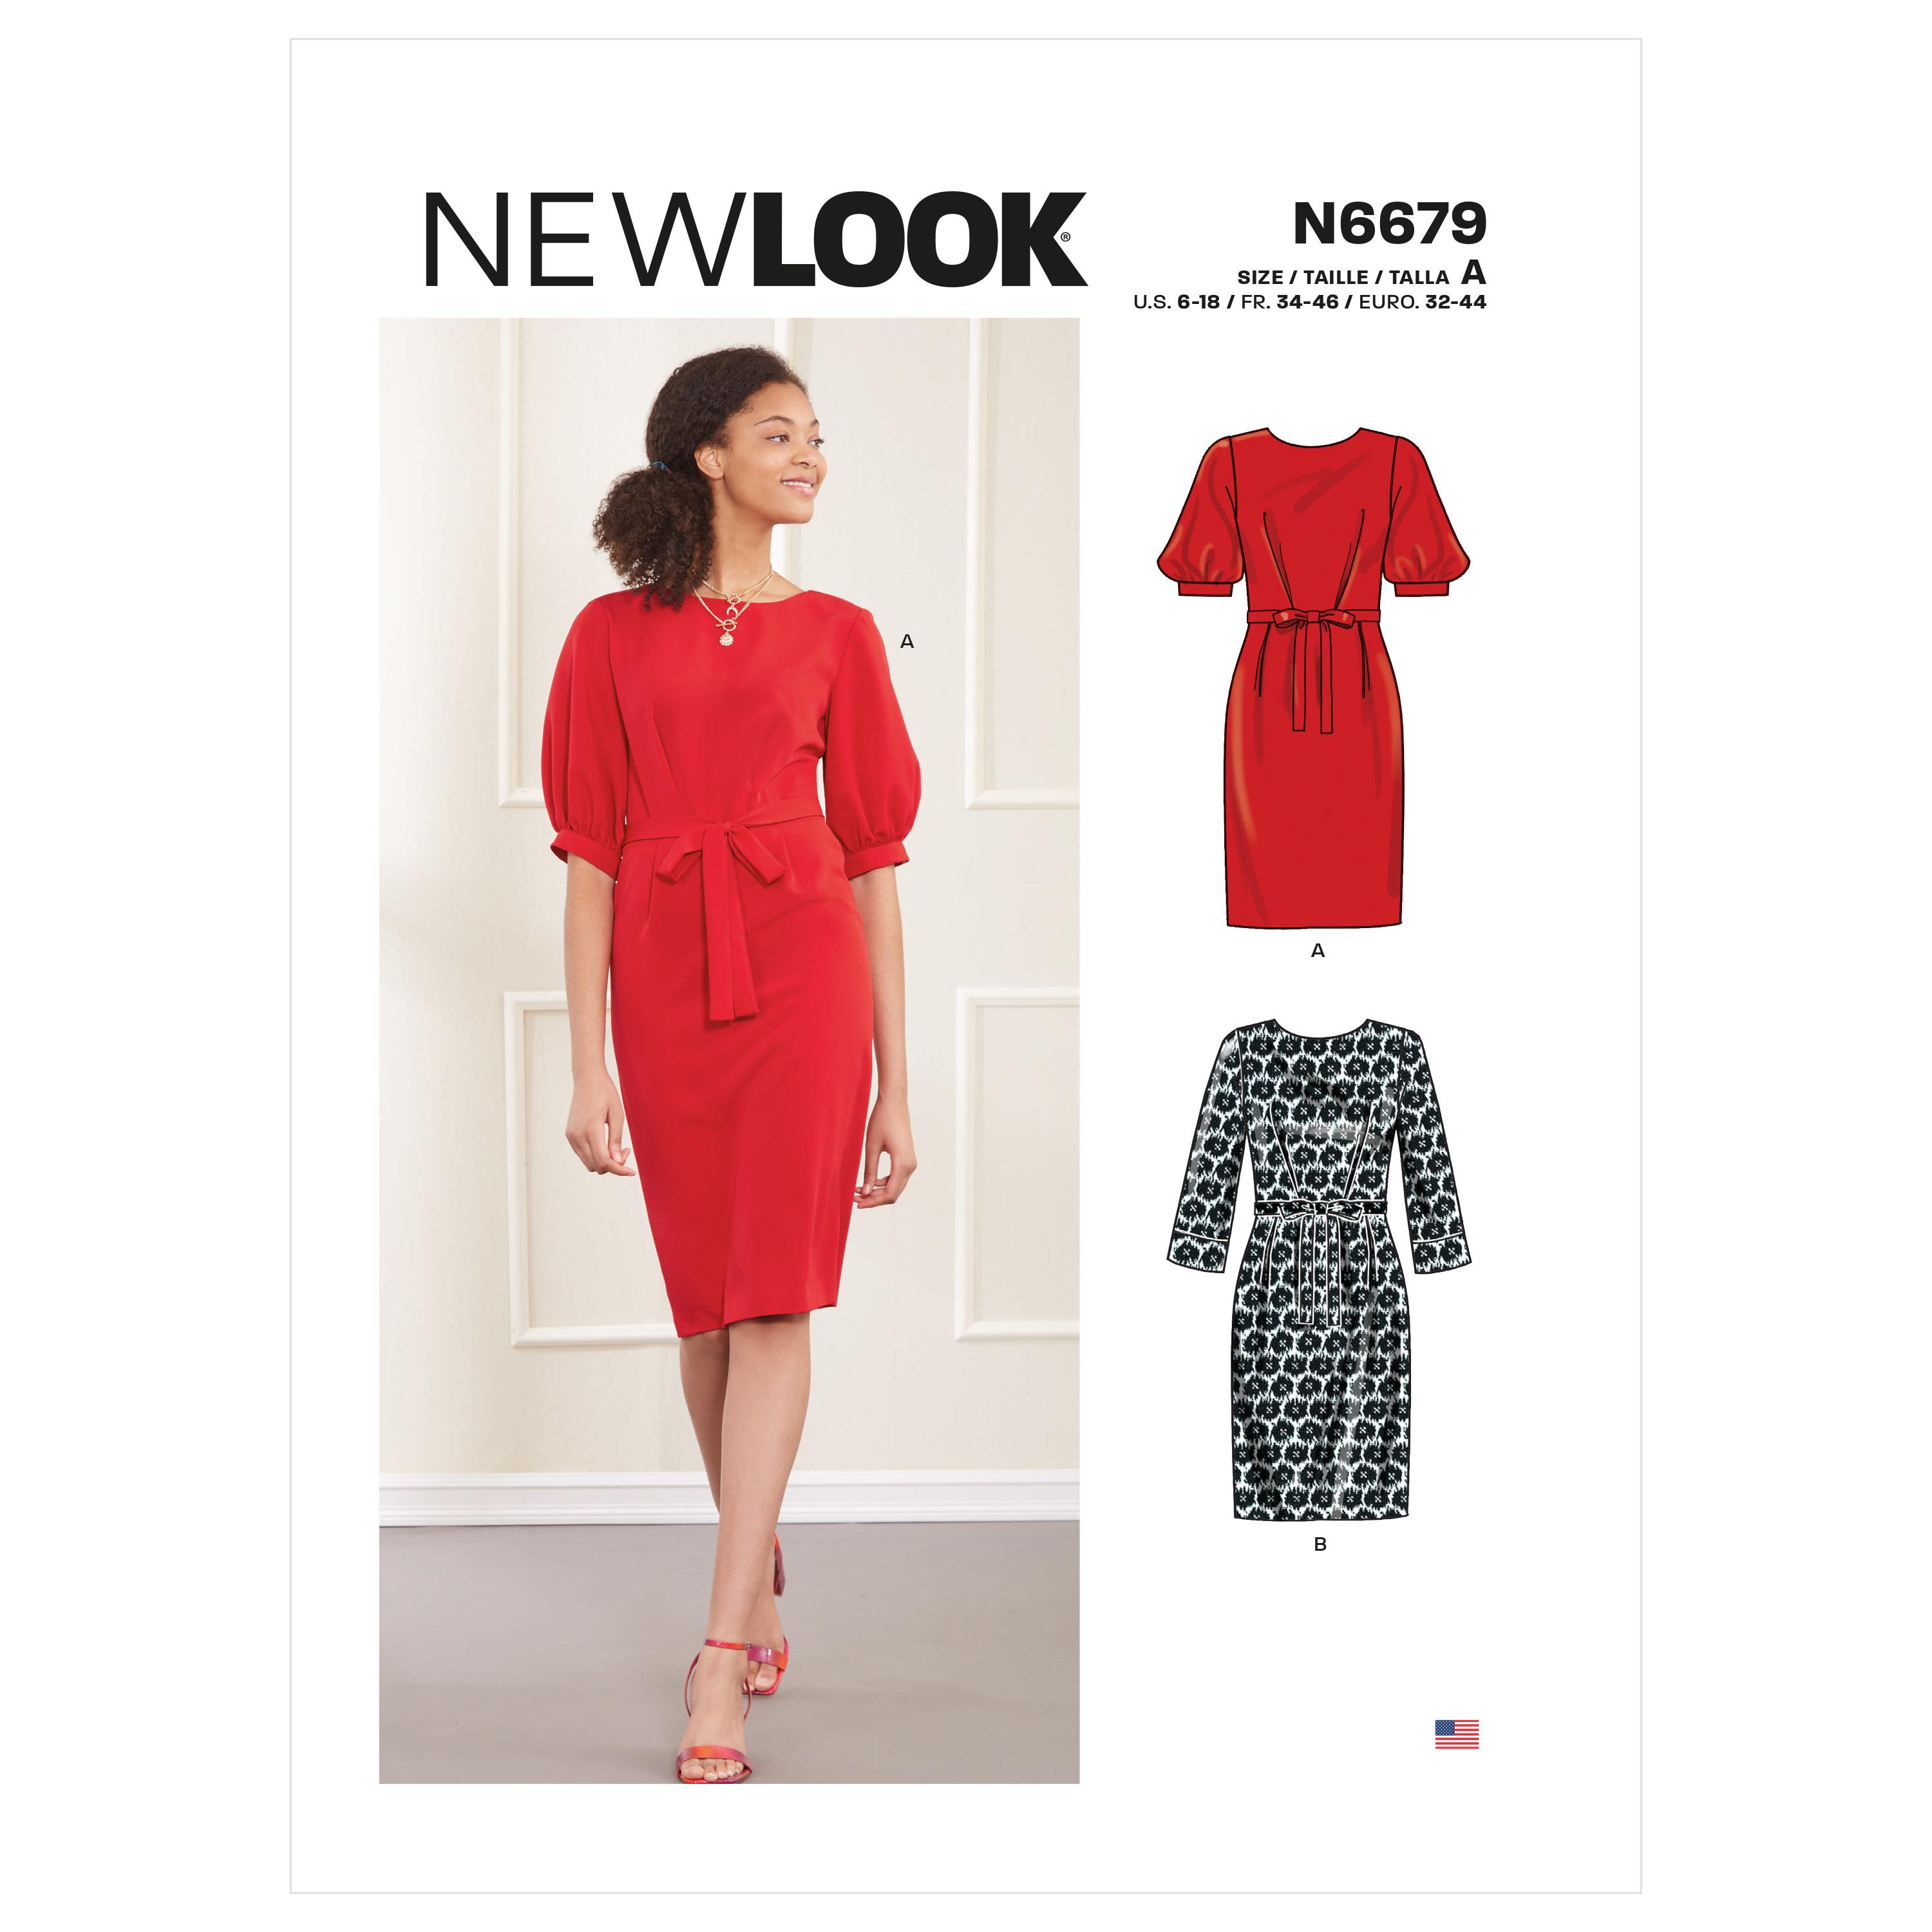 New Look Sewing Pattern N6679 Misses' Knee Length Dress With Sleeve Variations